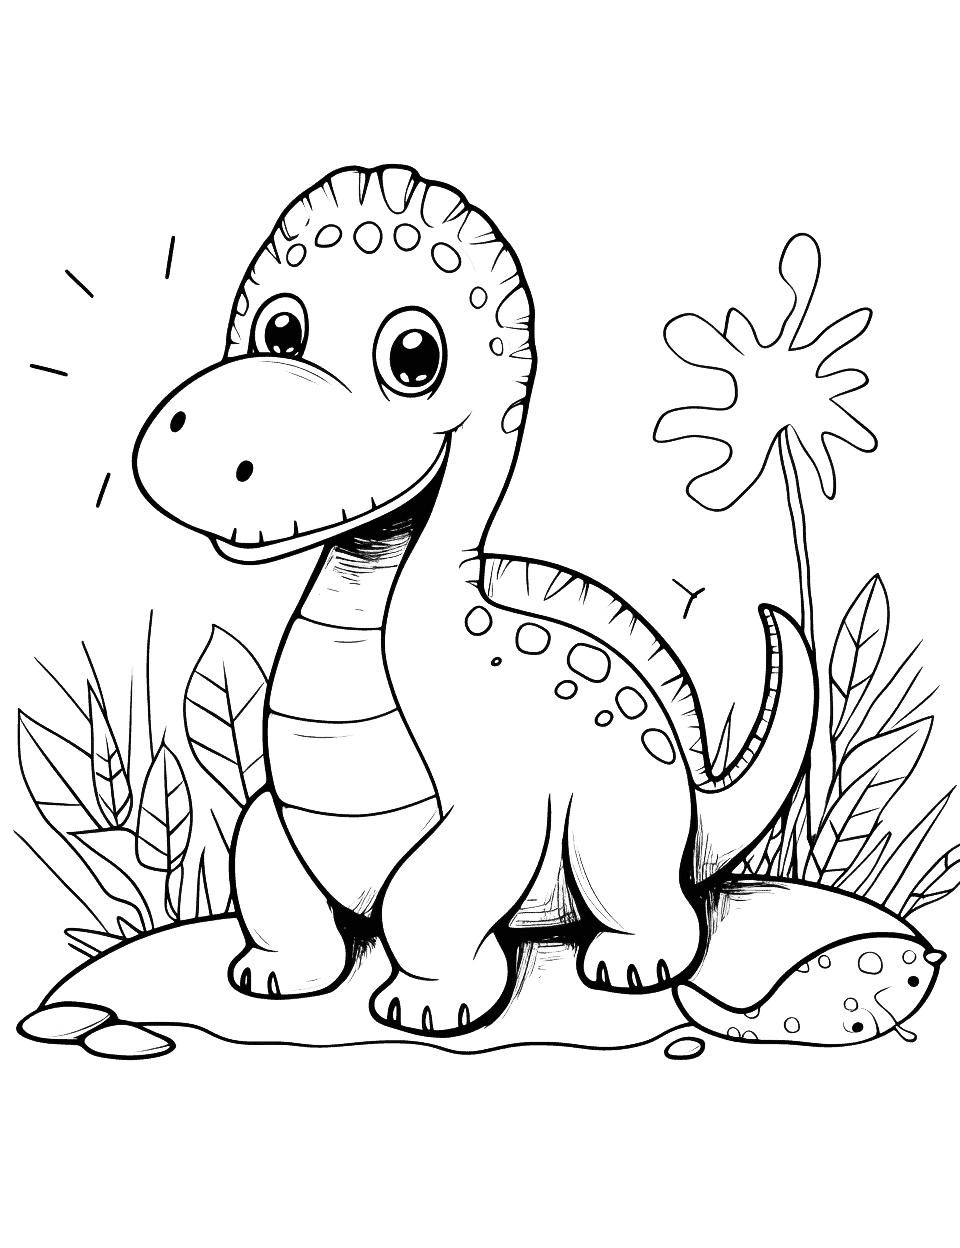 Cute Dino Friend Dinosaur Coloring Page - Cartoonish, cute dinosaur playing outdoors.